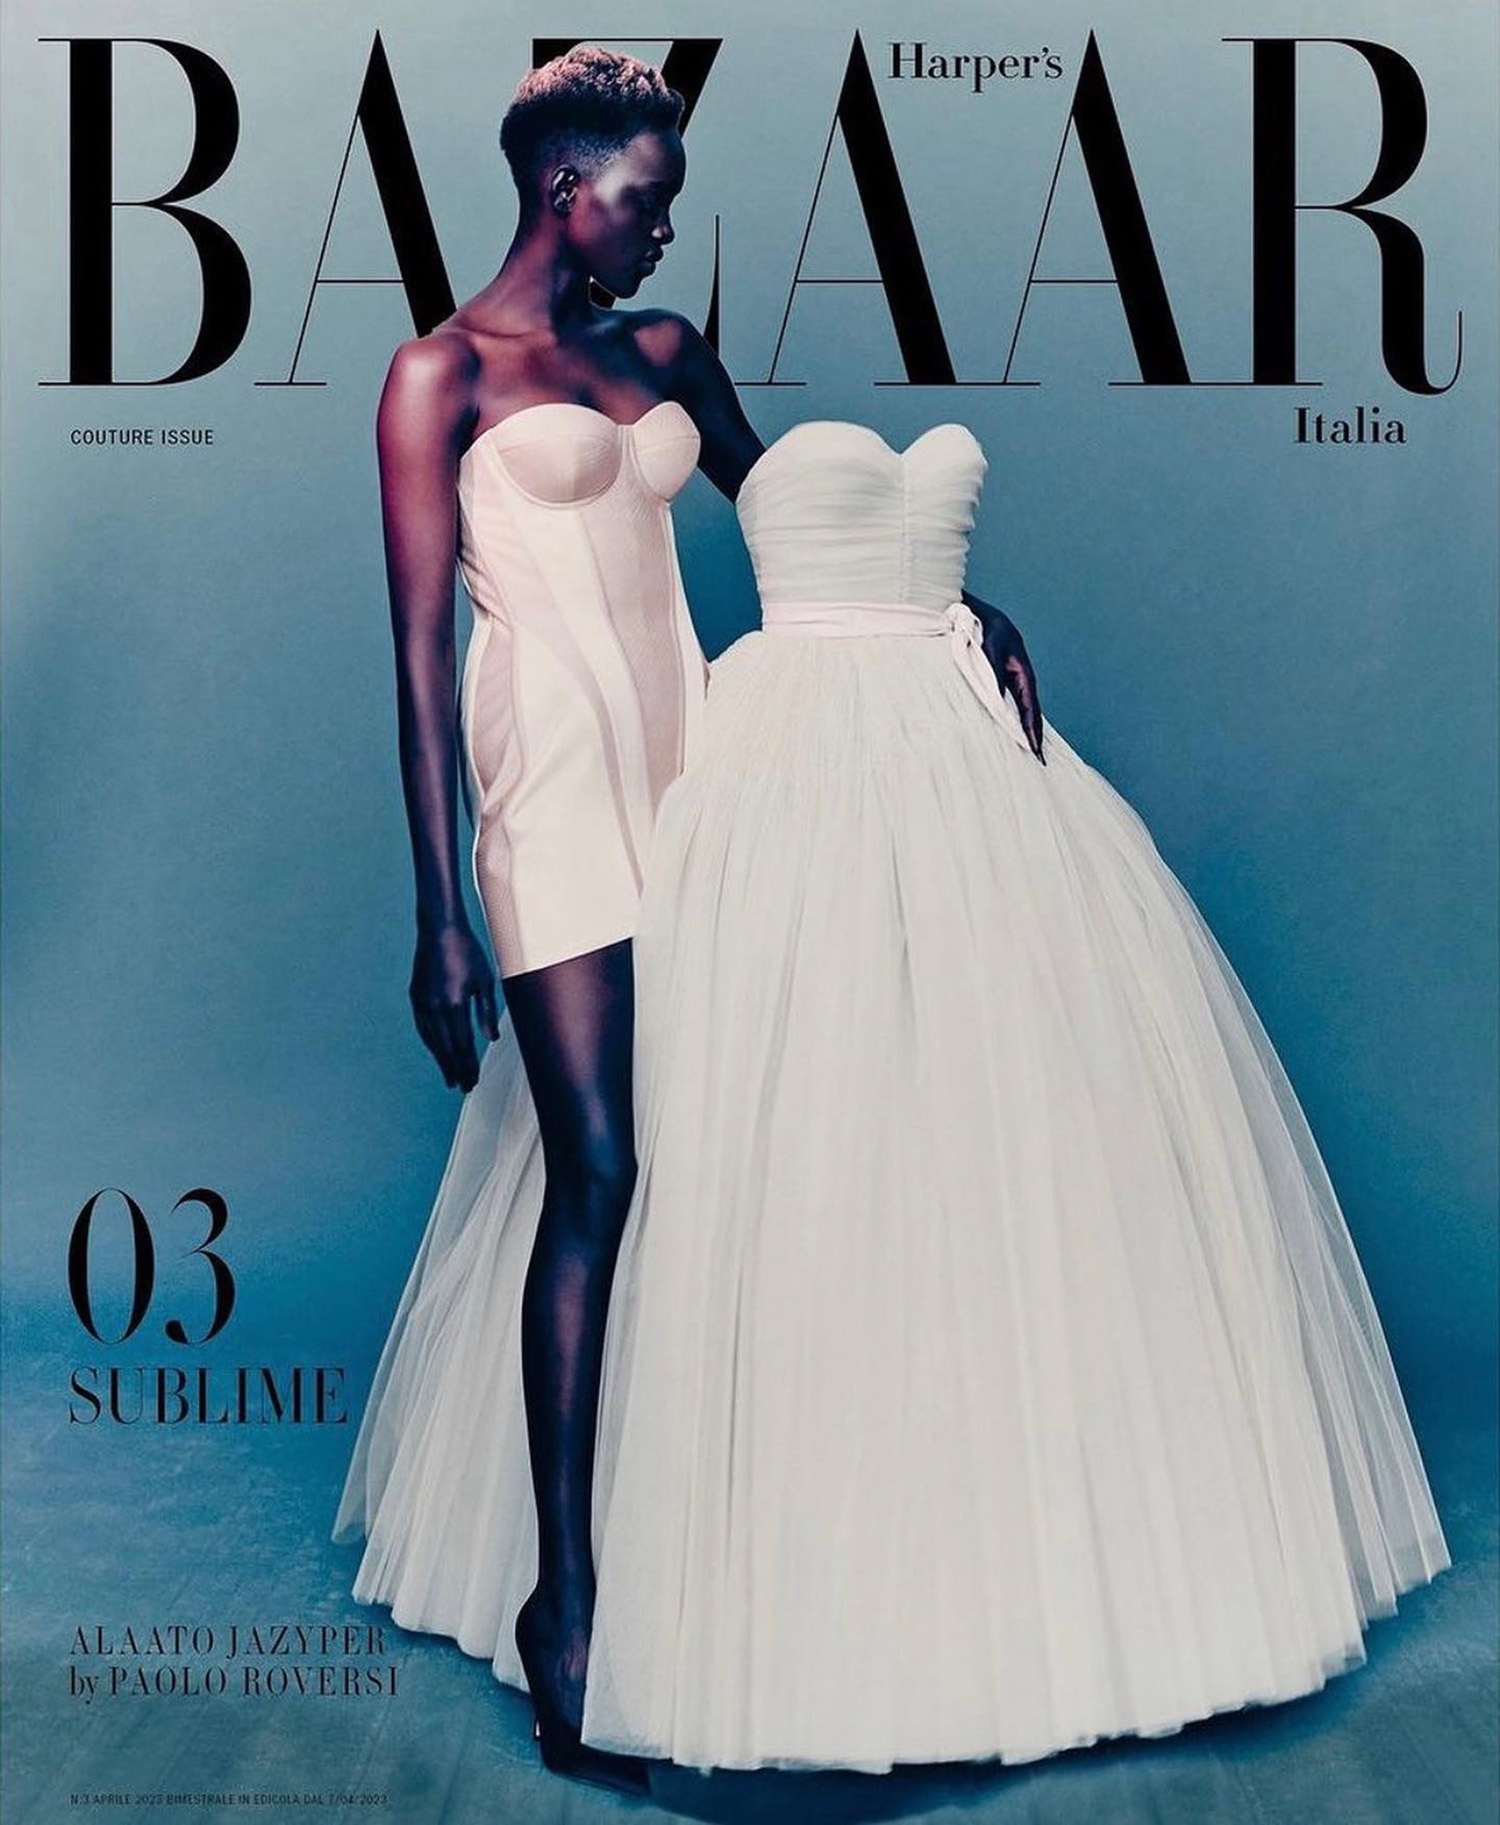 - Bazaar Jazyper fashionotography Italia Roversi Paolo by covers Alaato April/May 2023 Michael Harper\'s